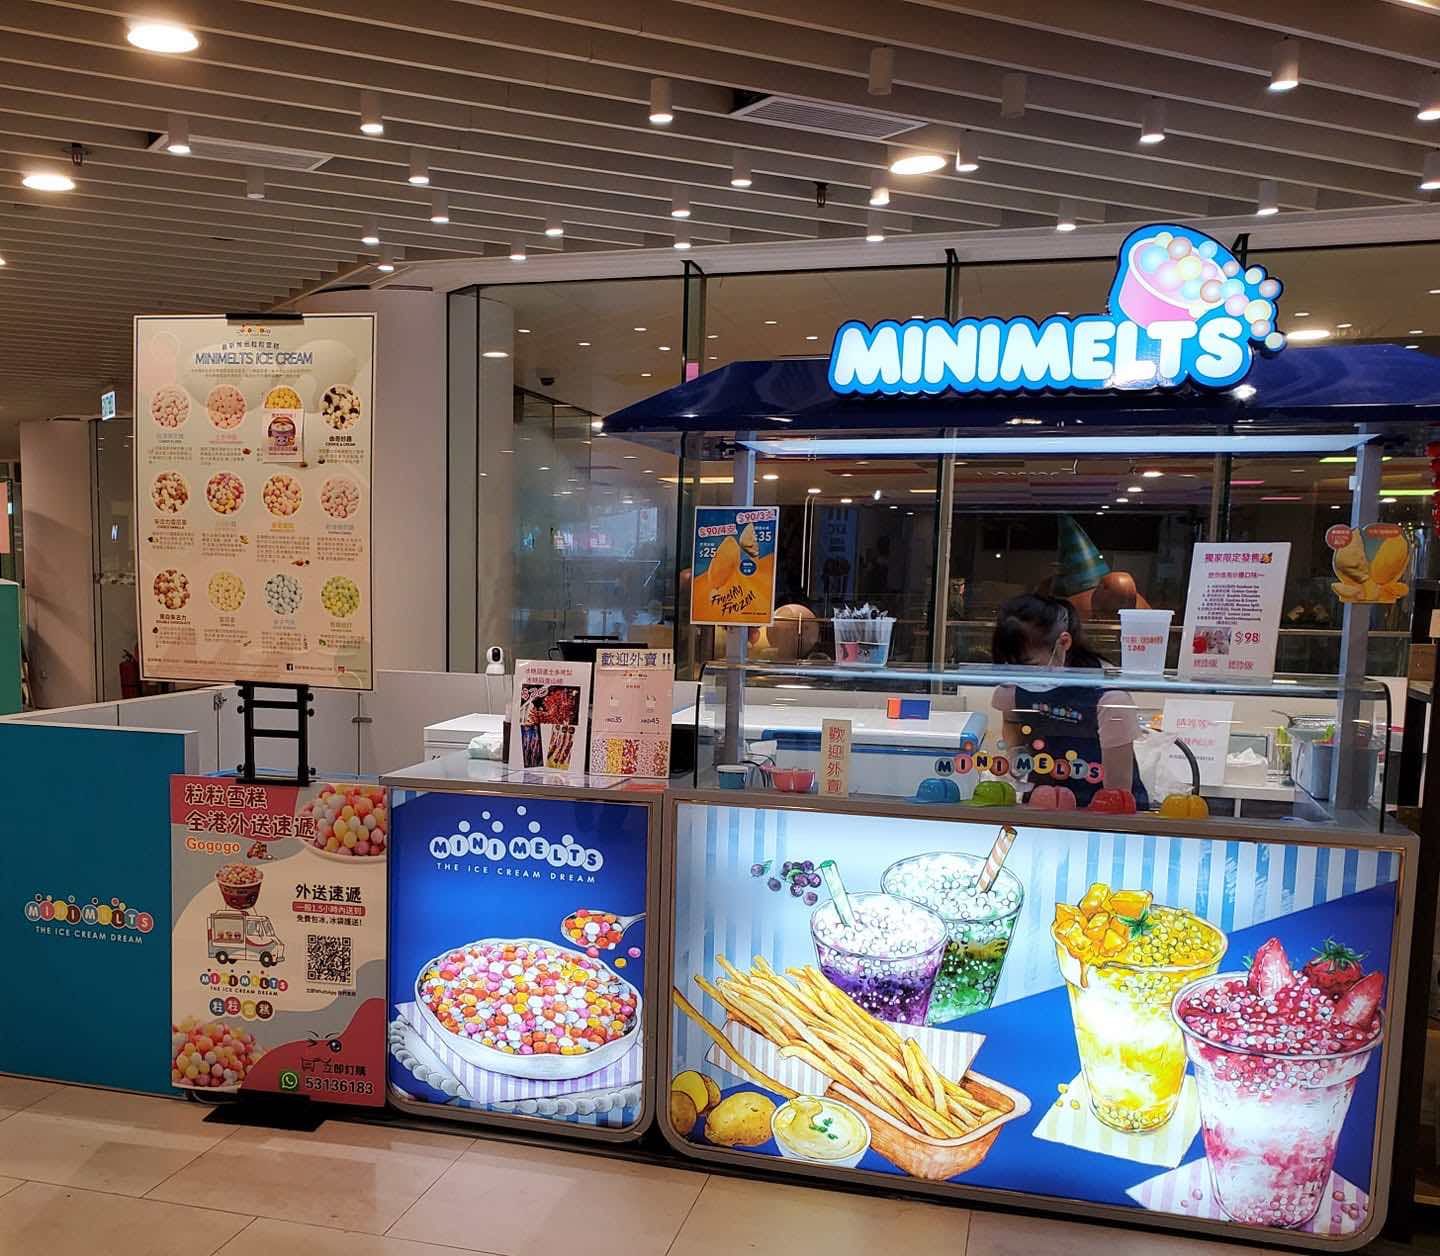 Mini Melts 粒粒雪糕的特許經營香港區加盟店項目7